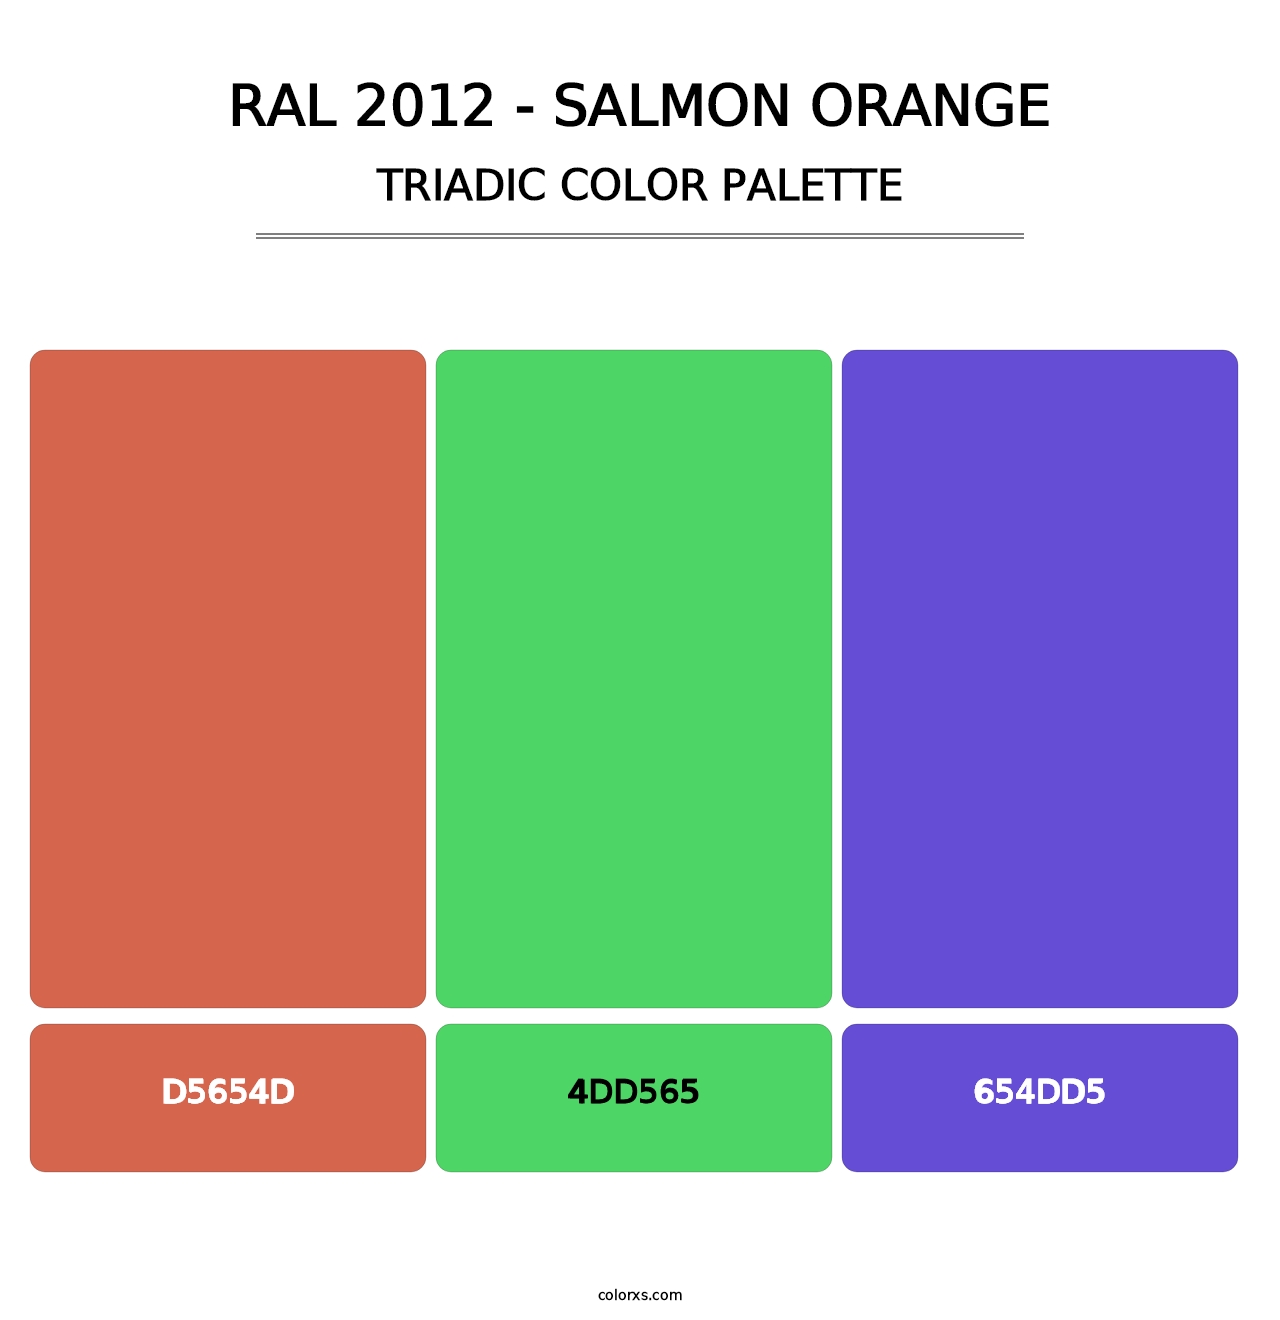 RAL 2012 - Salmon Orange - Triadic Color Palette